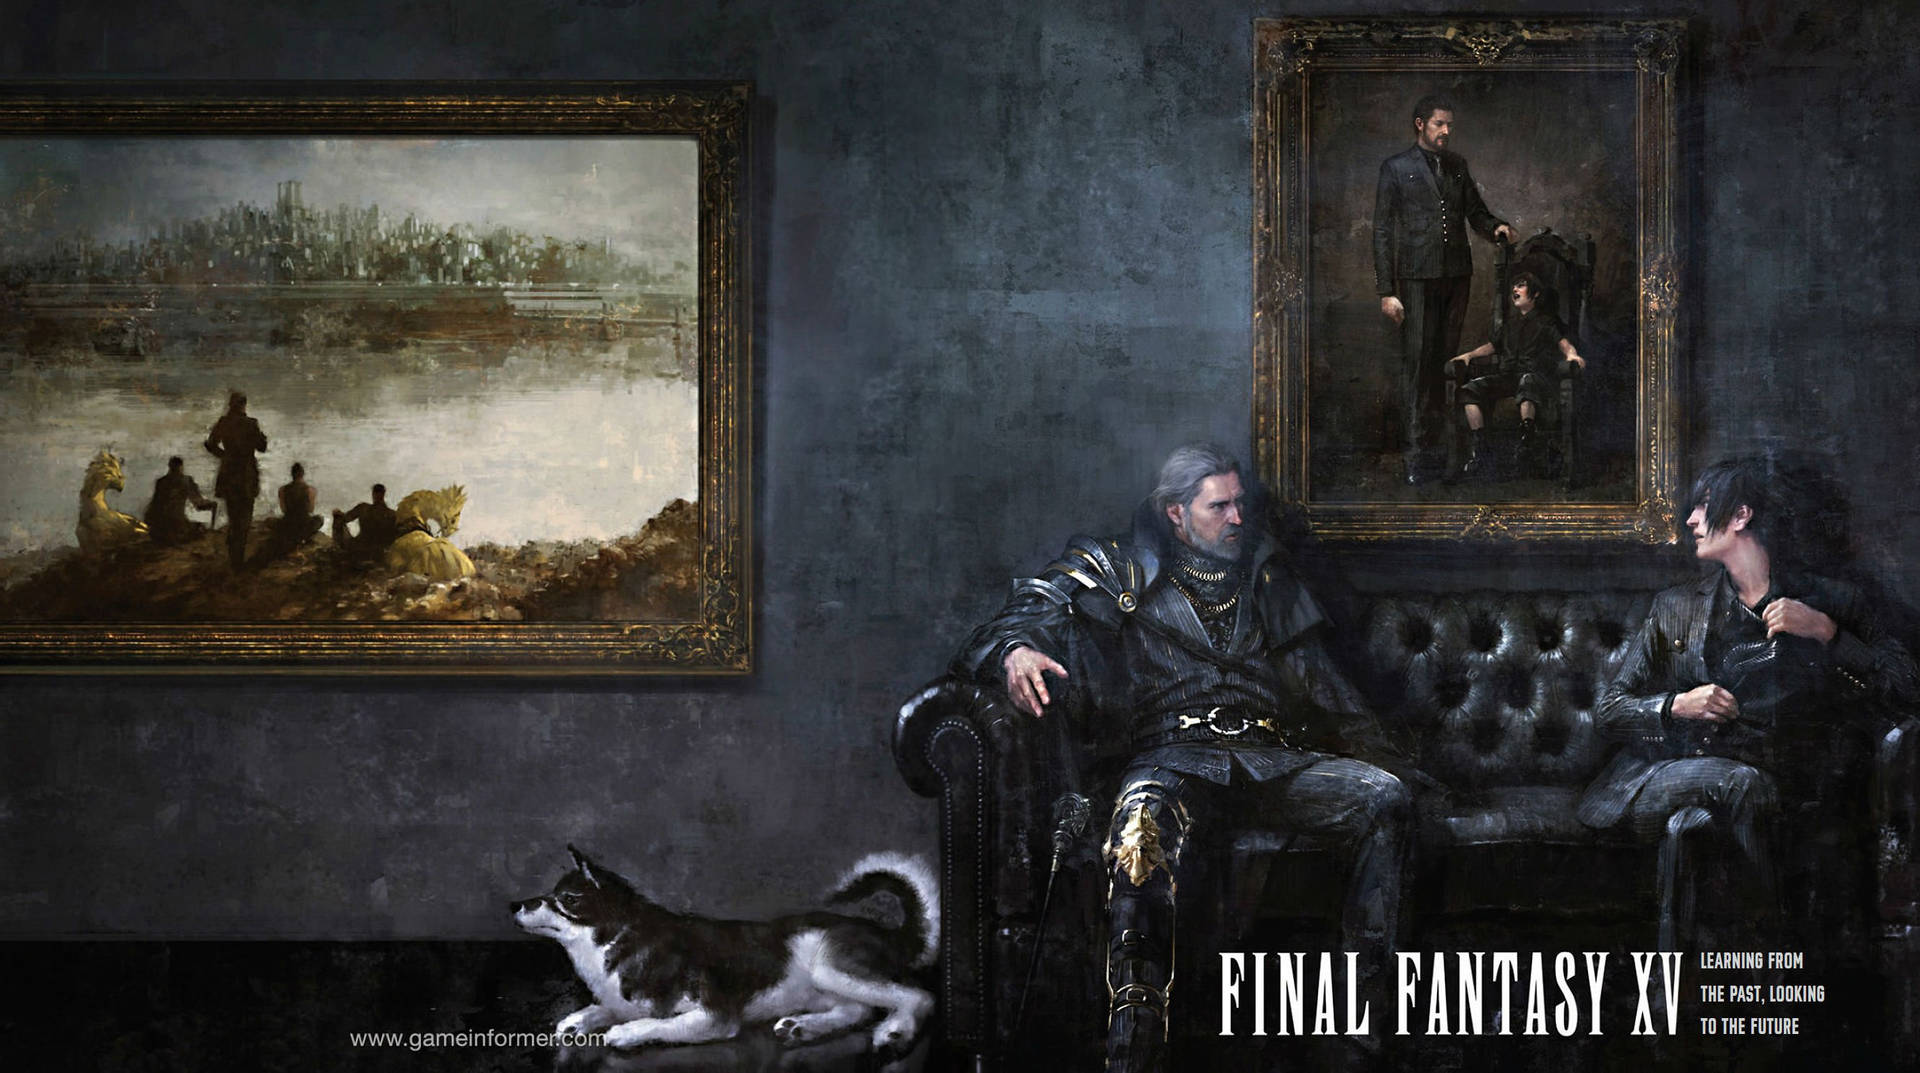 Noctis And King Regis Of Final Fantasy Xv Wallpaper